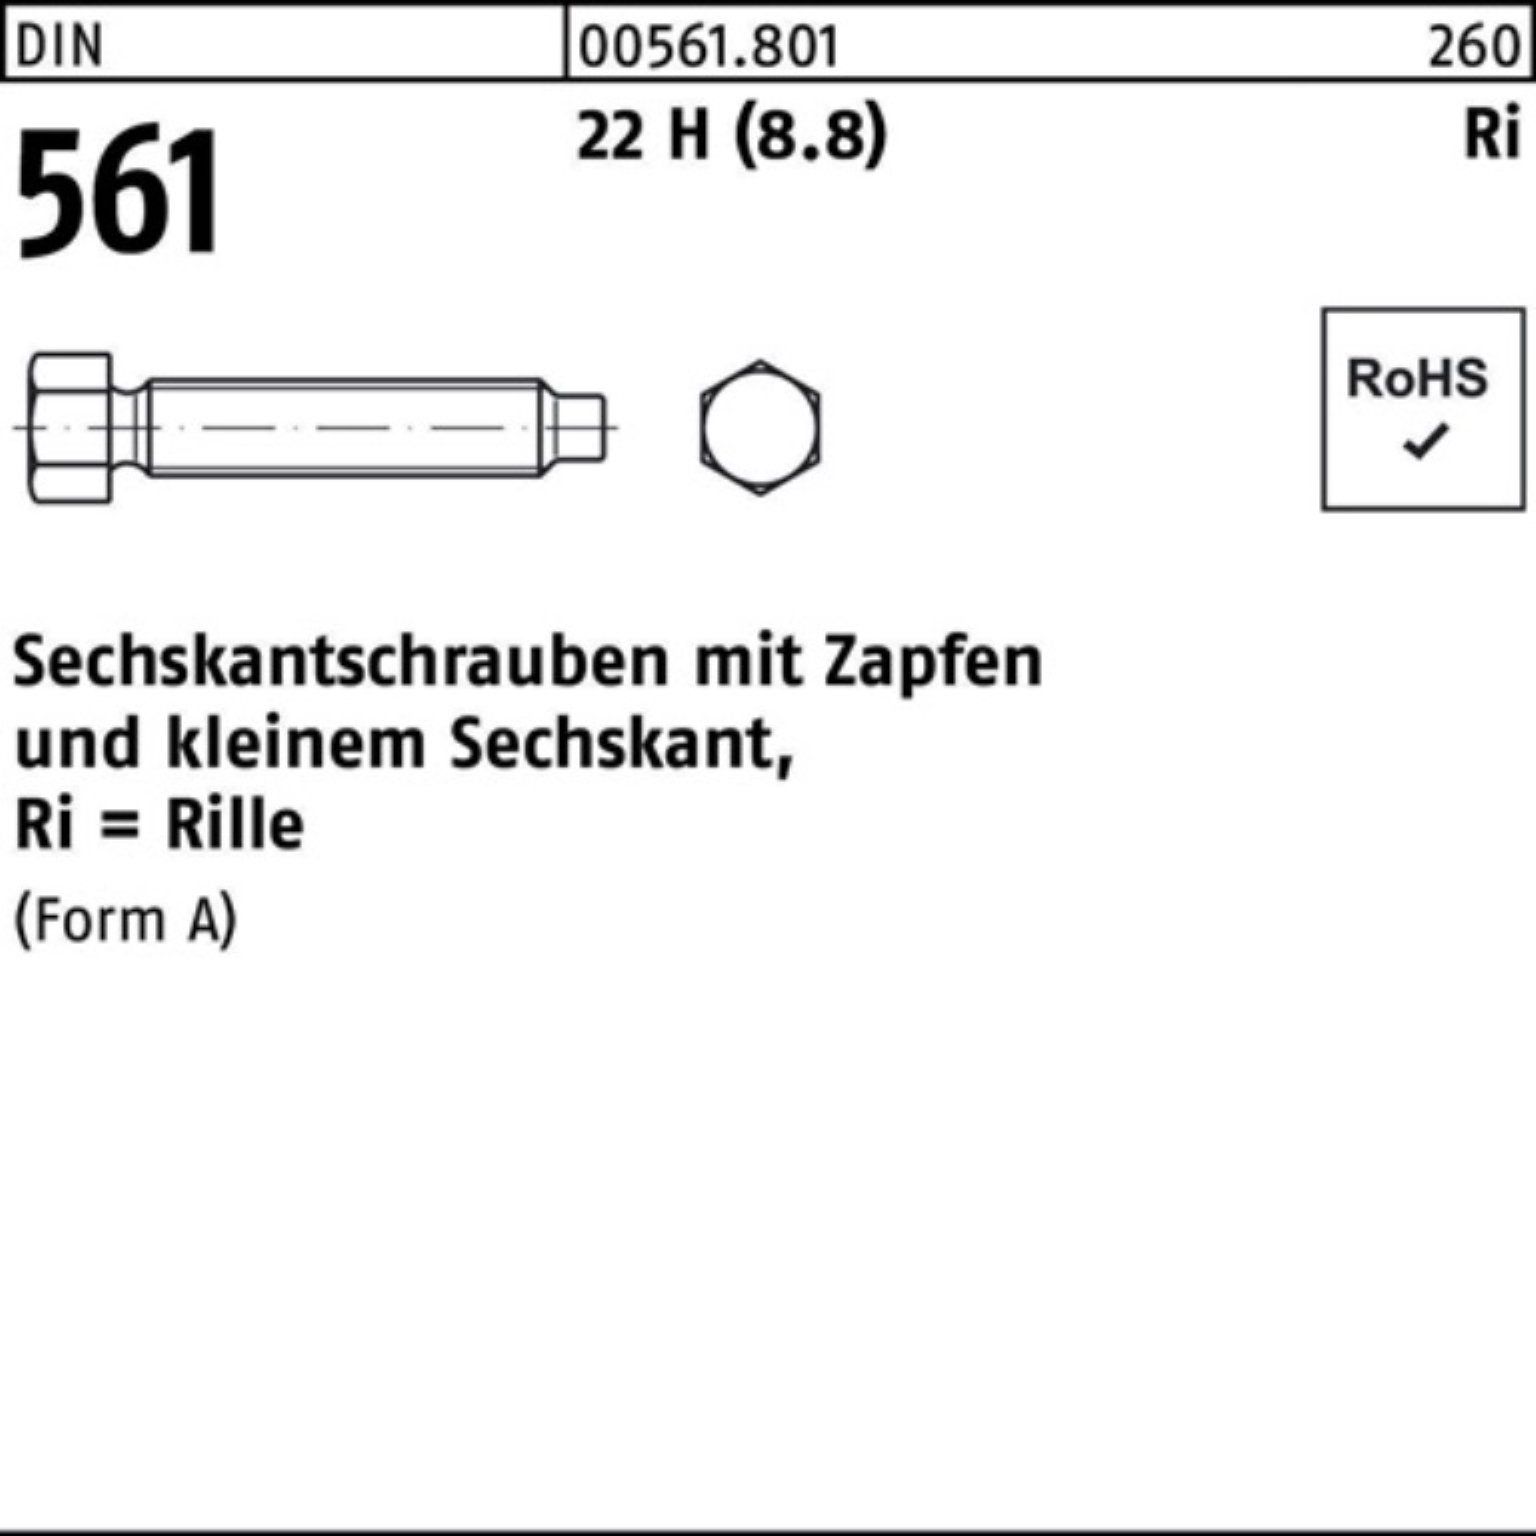 Reyher Sechskantschraube 100er Pack Sechskantschraube DIN 561 Zapfen AM 6x 30 22 H (8.8) 100 St